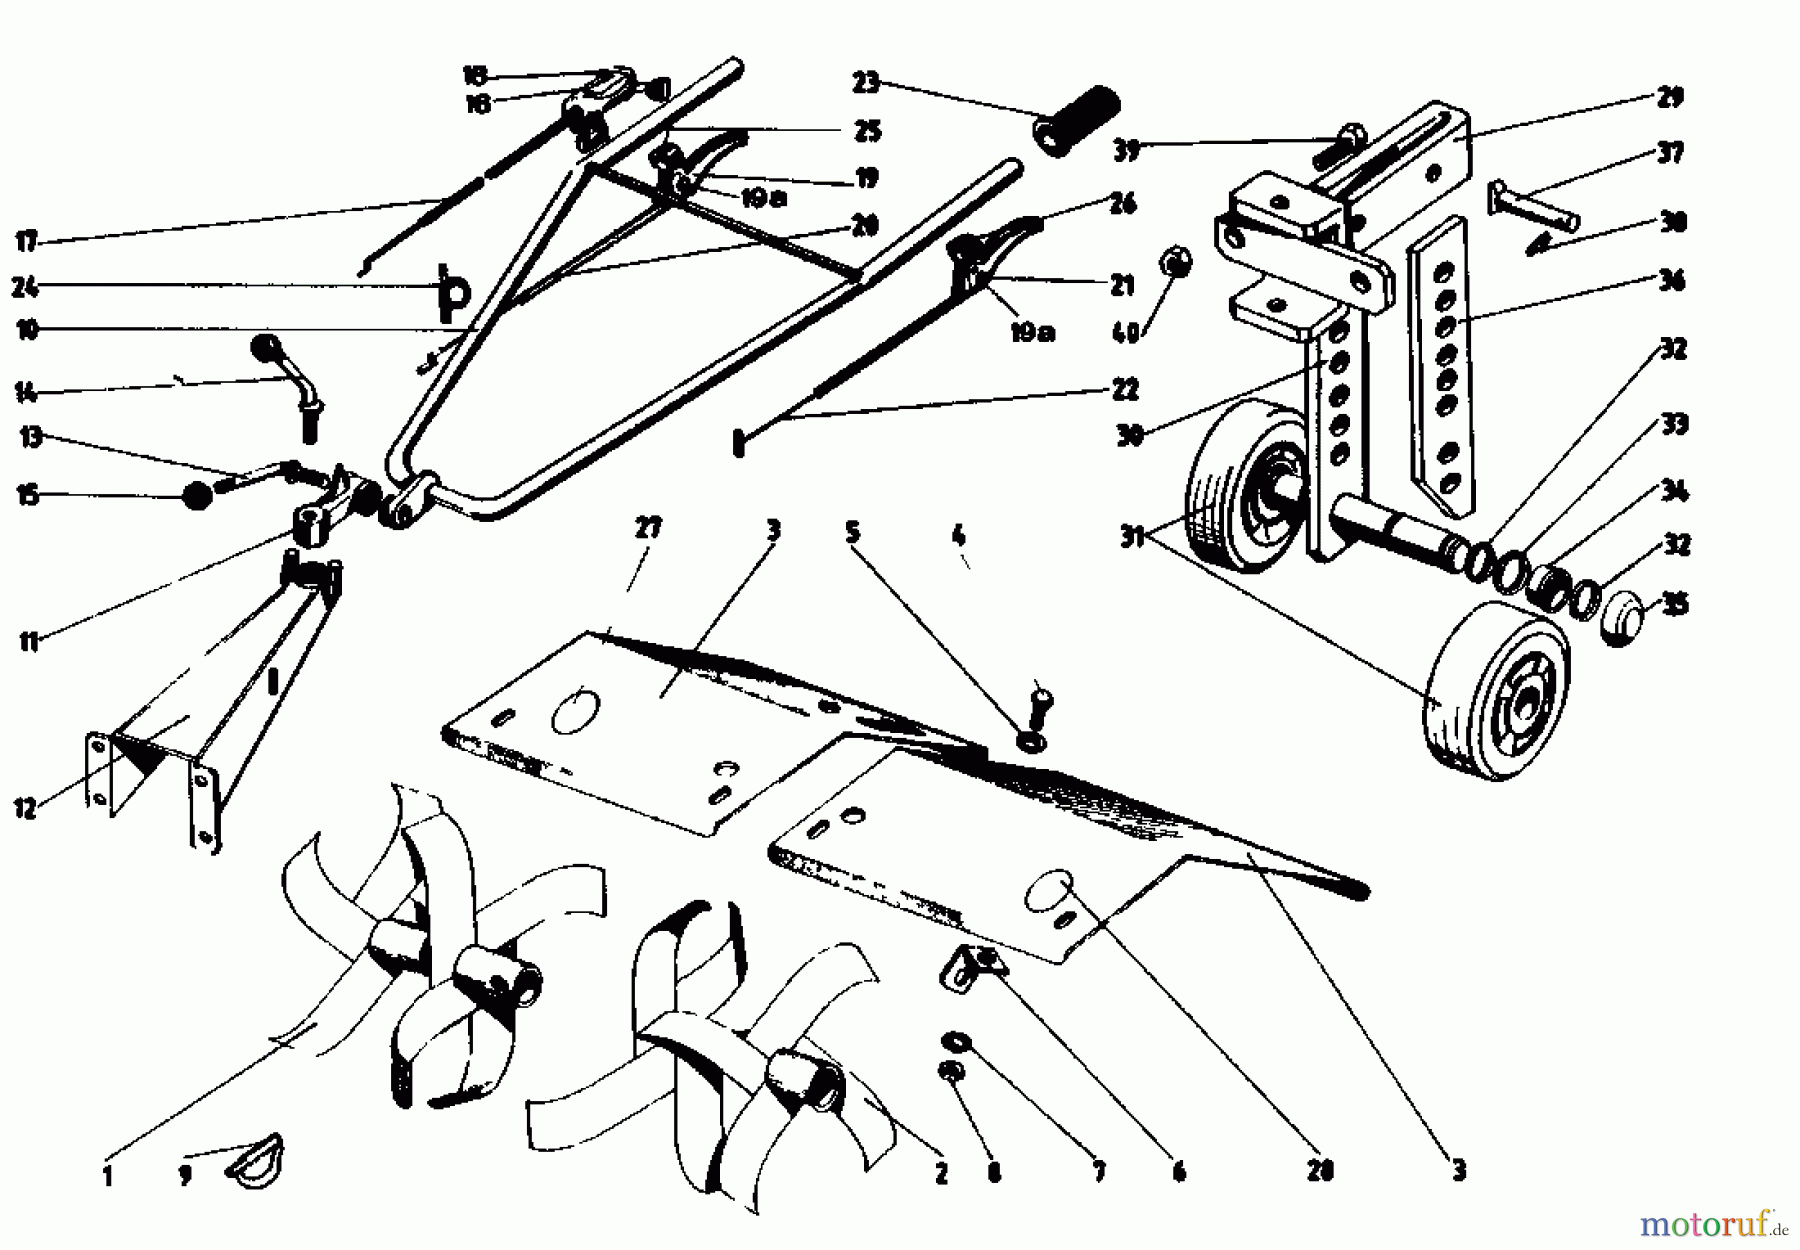  Gutbrod Motorhacken MB 60-52 07512.09  (1986) Grundgerät